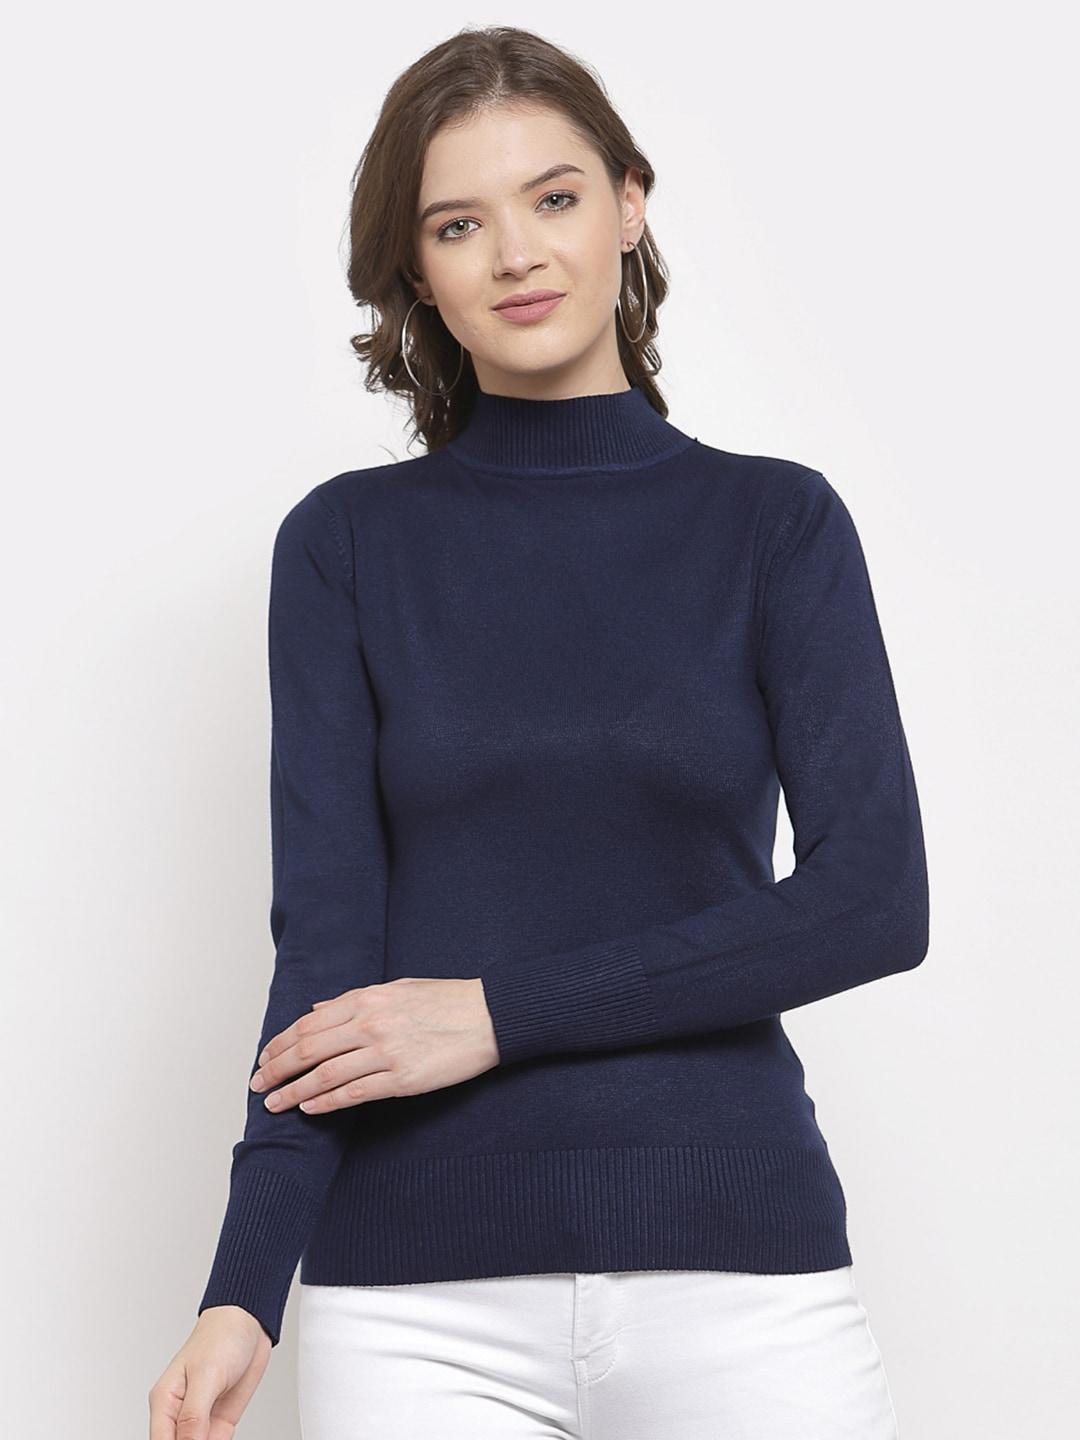 mafadeny-women-turtle-neck-pullover-sweater